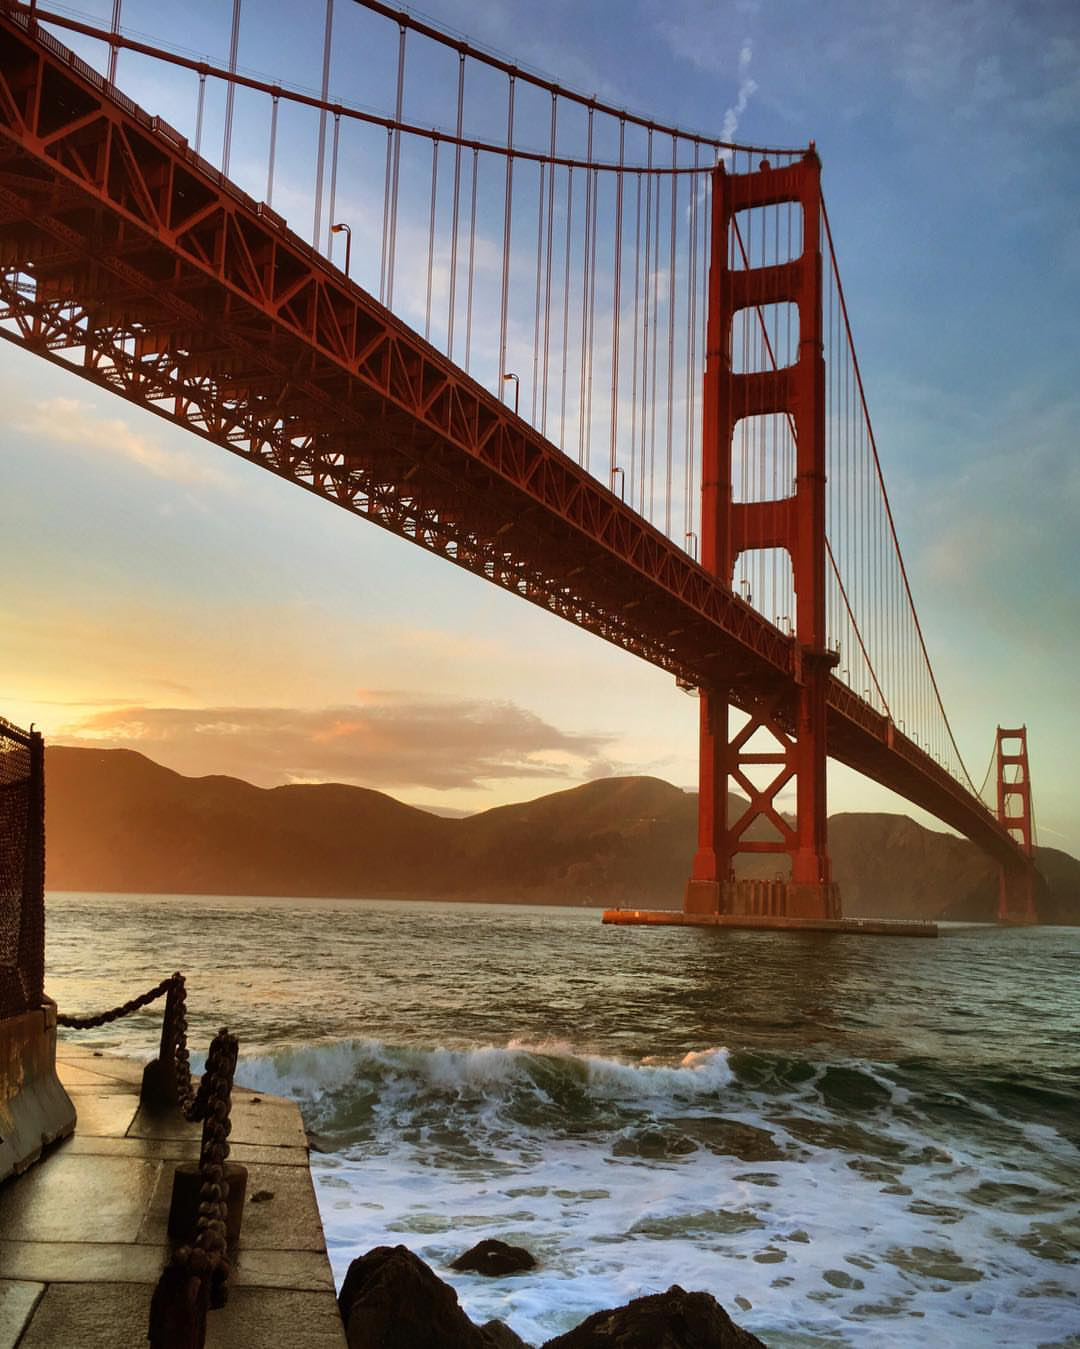 The red Golden Gate Bridge at sunset. Photo by Instagram user @ludditeking